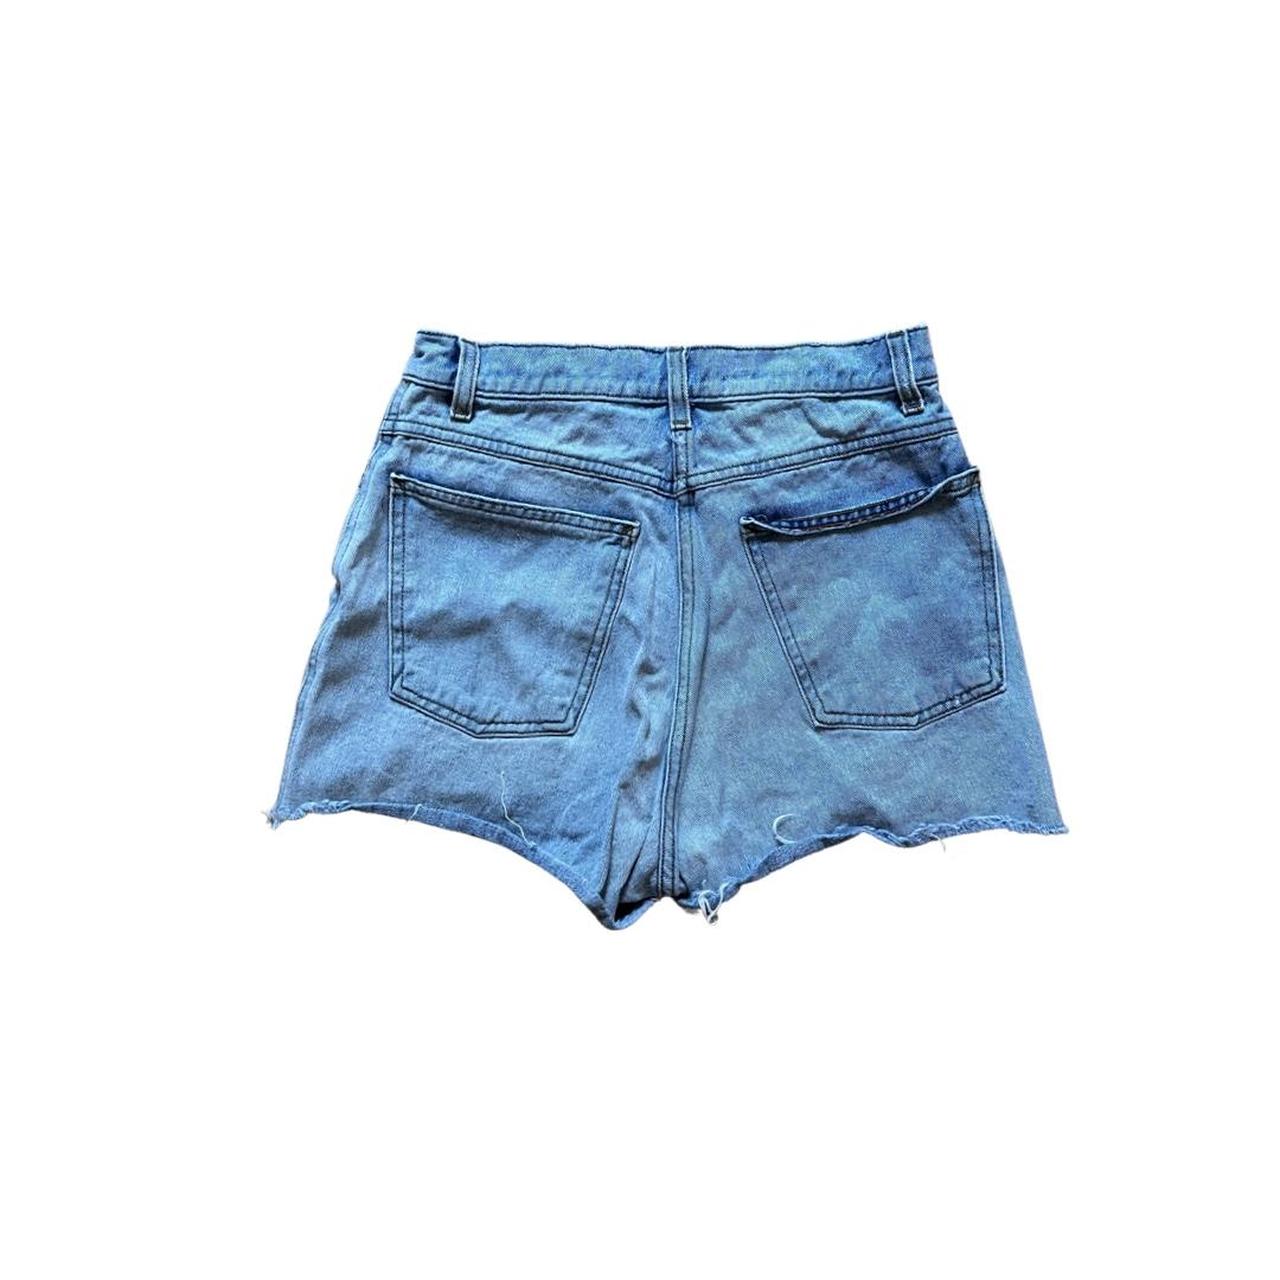 American Apparel Women's Blue Shorts (2)